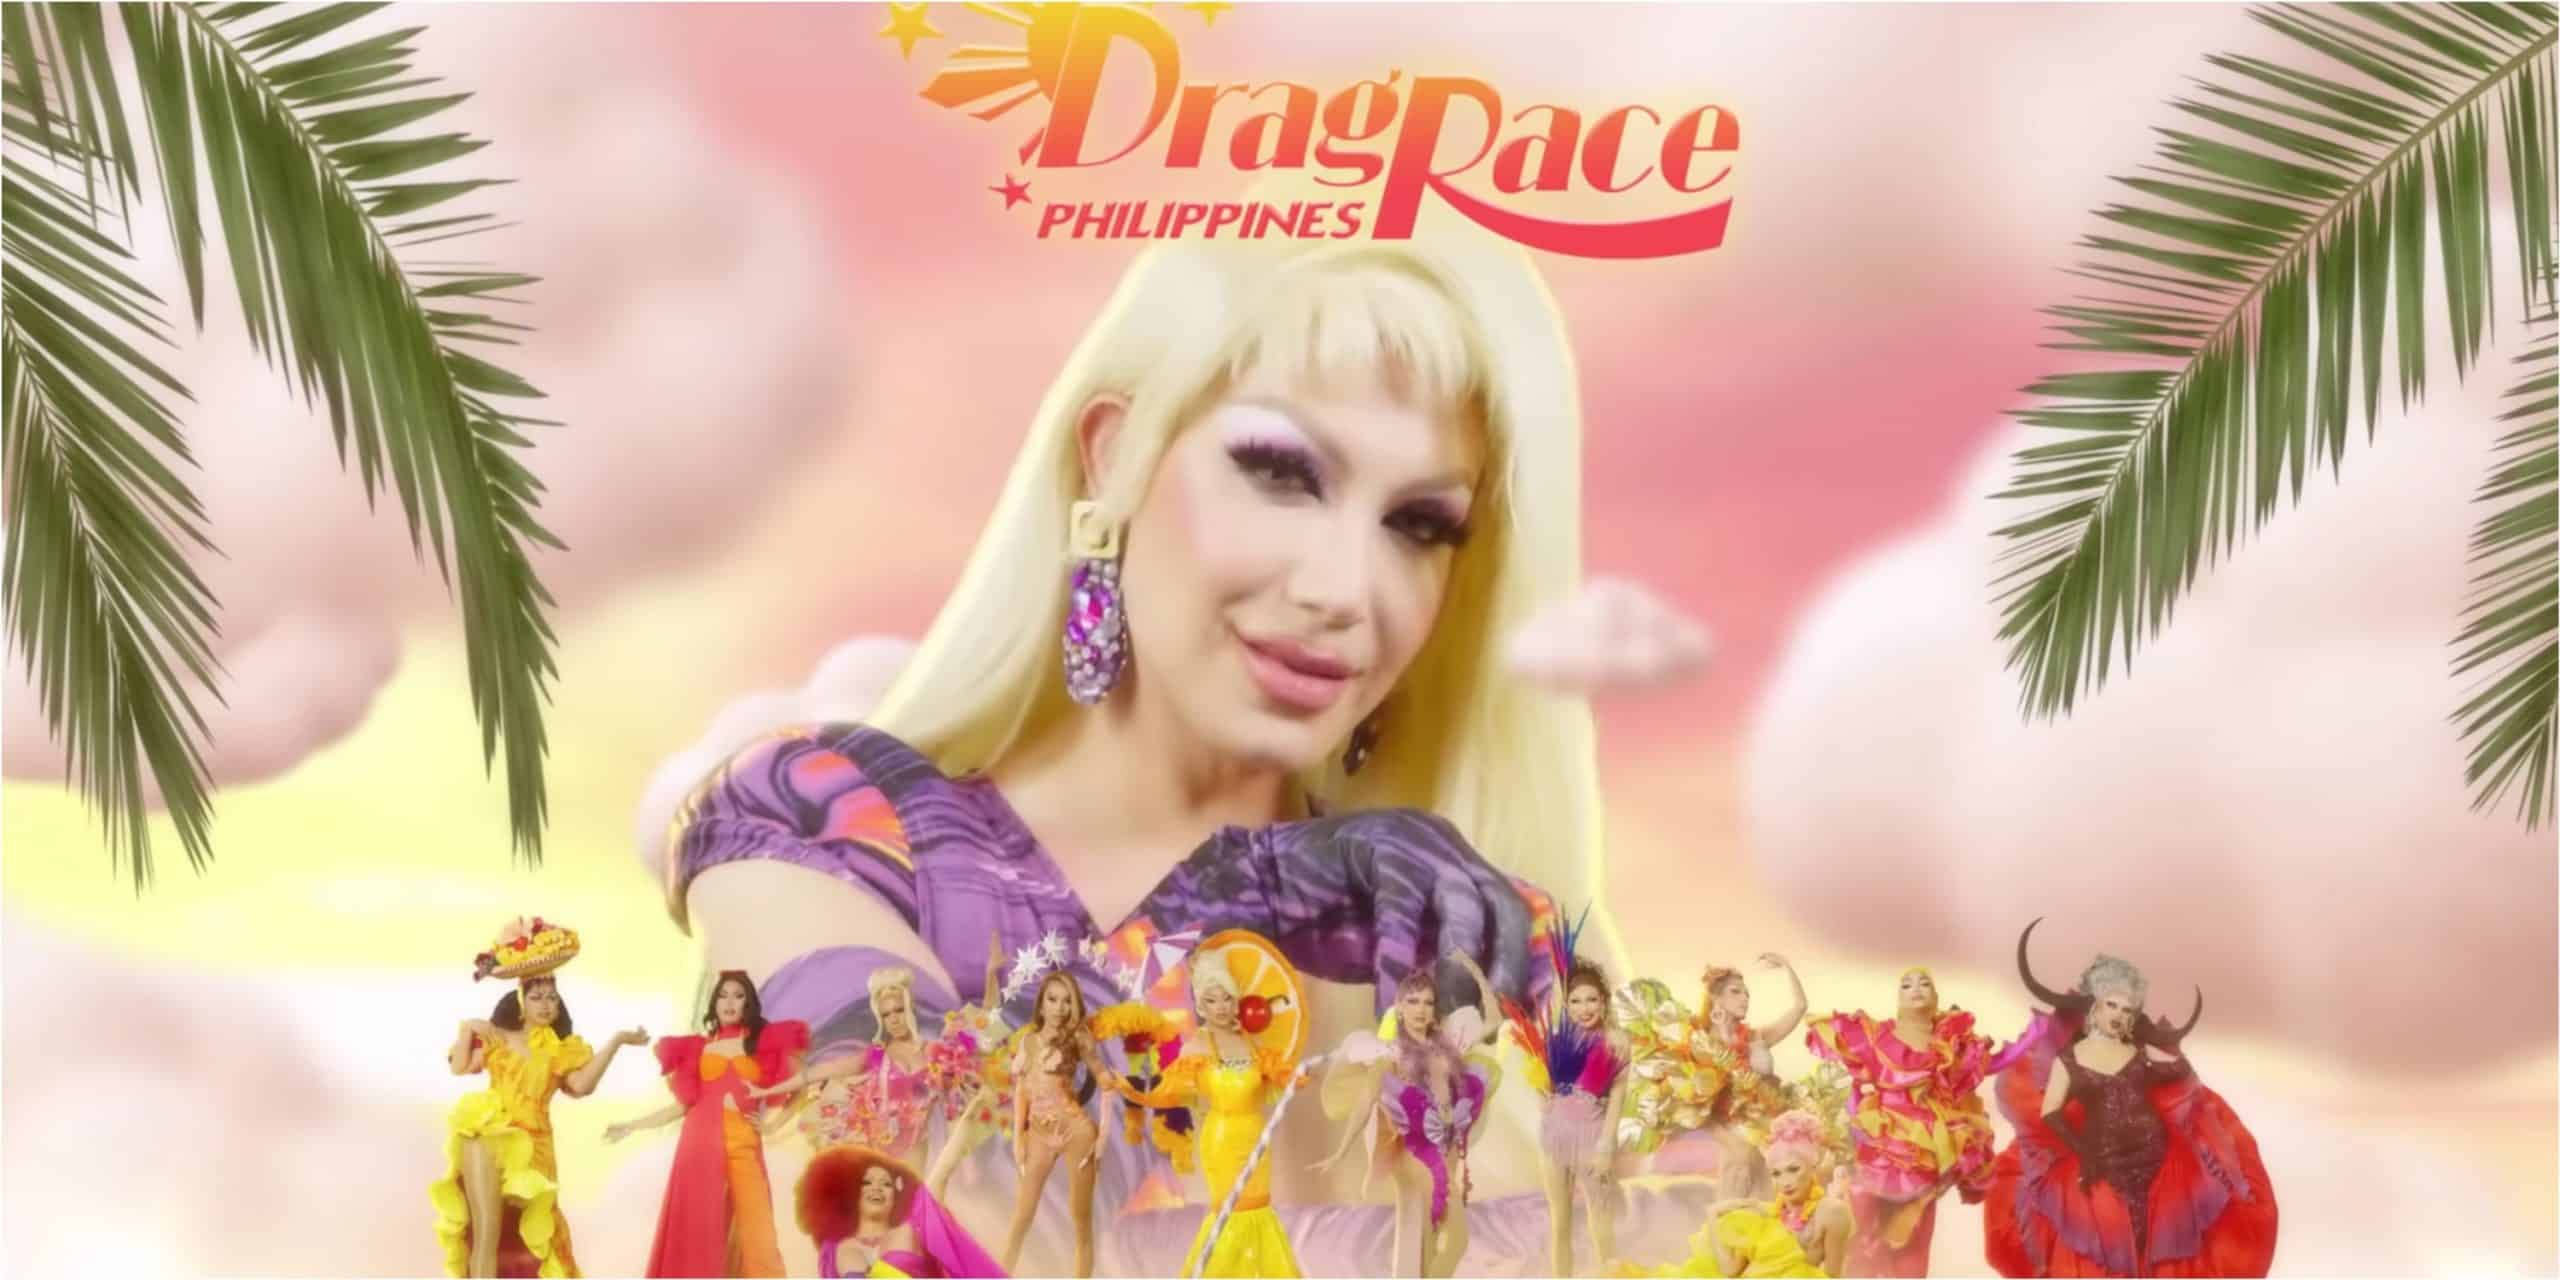 Filipino Show Drag Race Philippines Season 2 Episode 1 Contestants